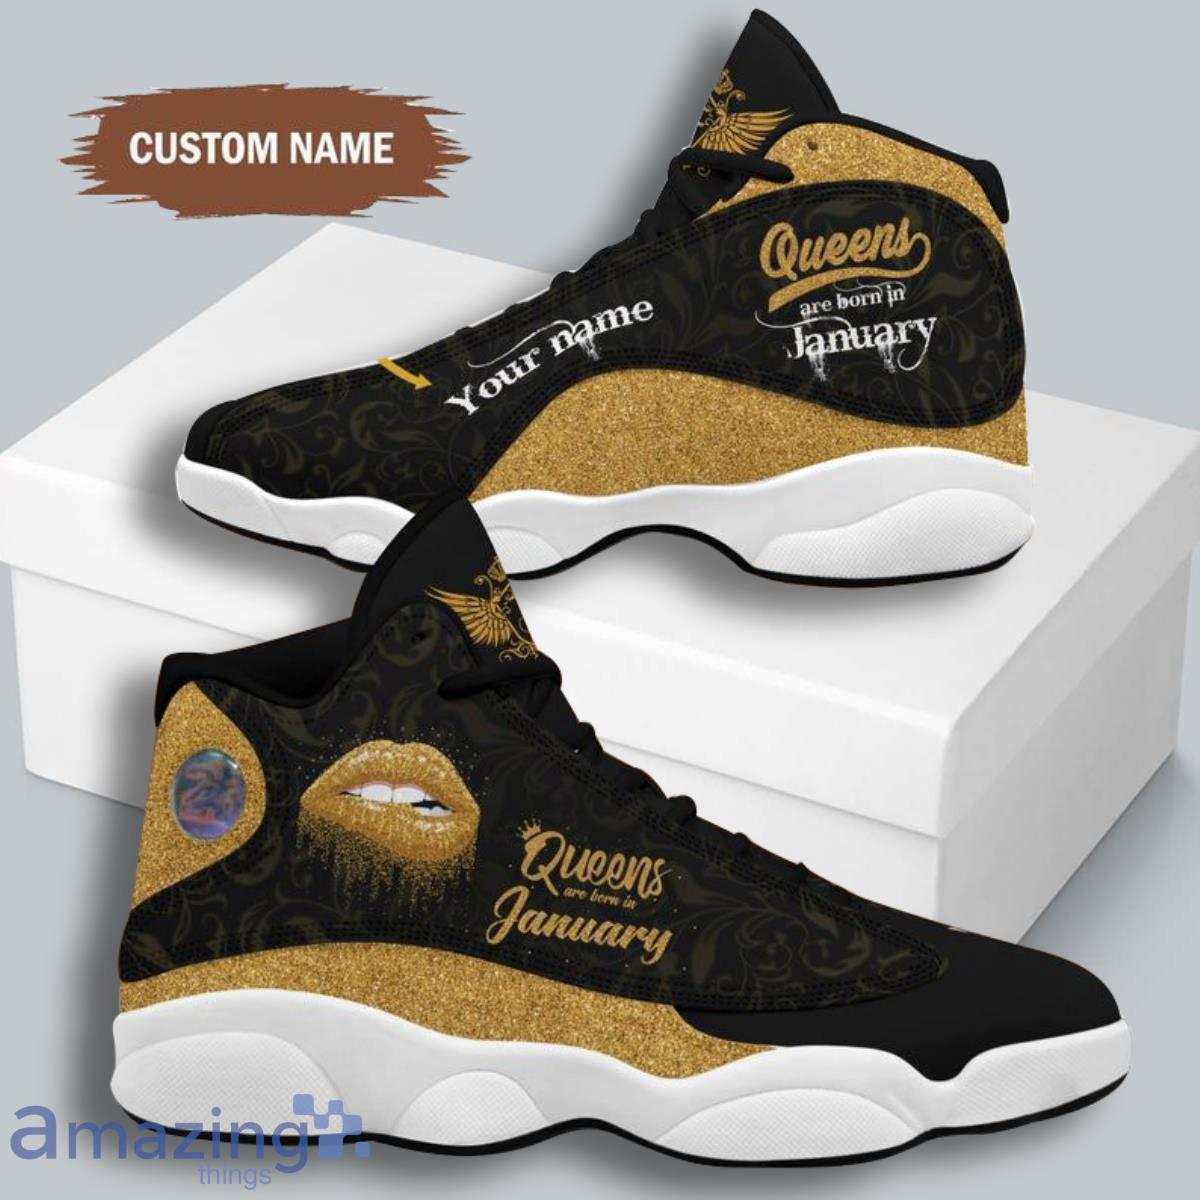 May King And Queen Air Jordan 13 Custom Name Sneakers Best Gift For Men And  Women